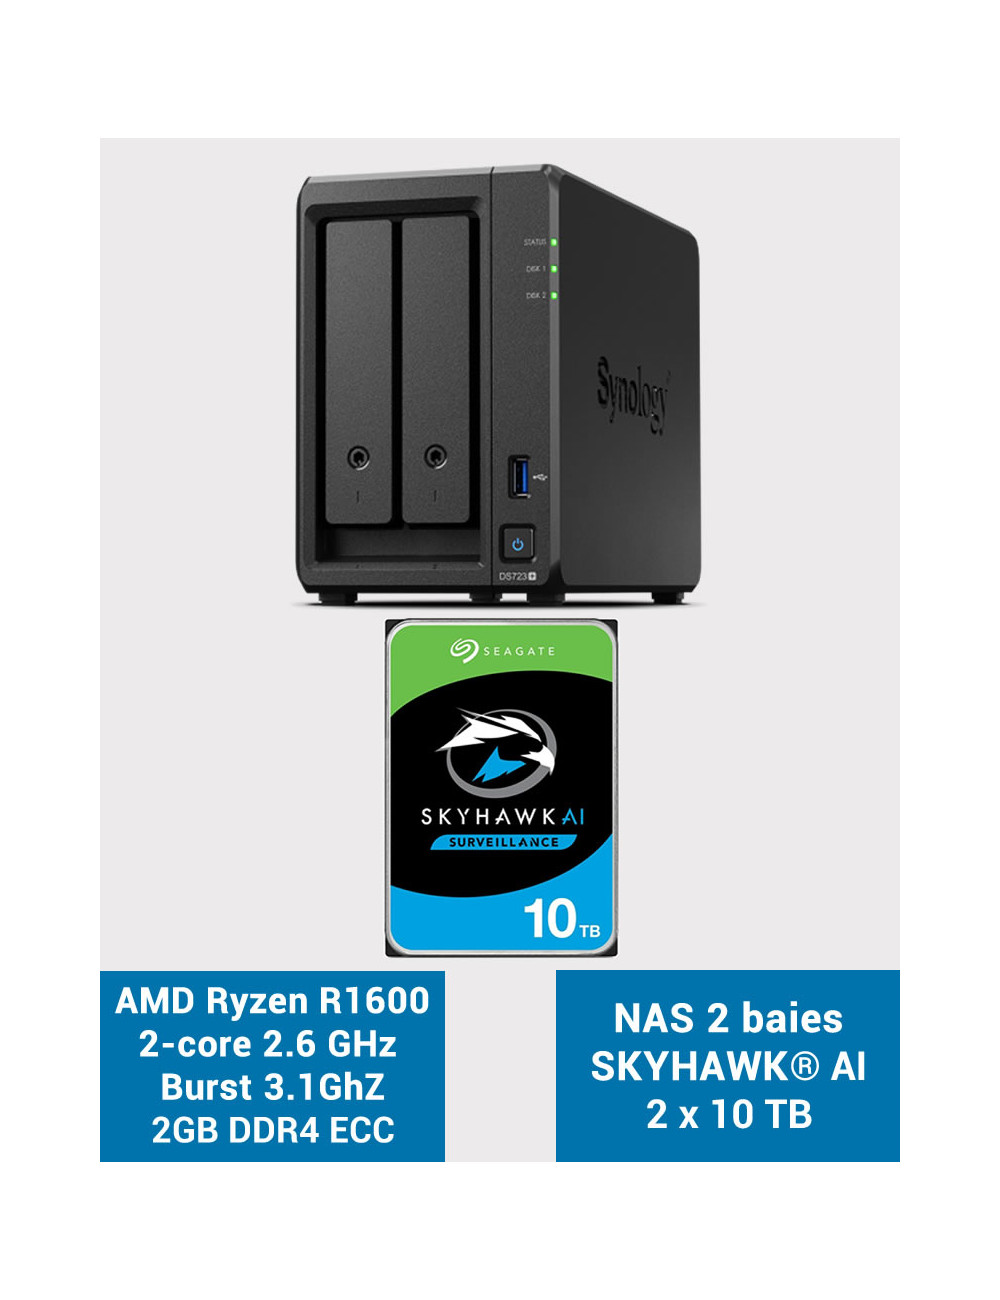 Synology DS723+ NAS Server SKYHAWK 20TB (2x10TB)